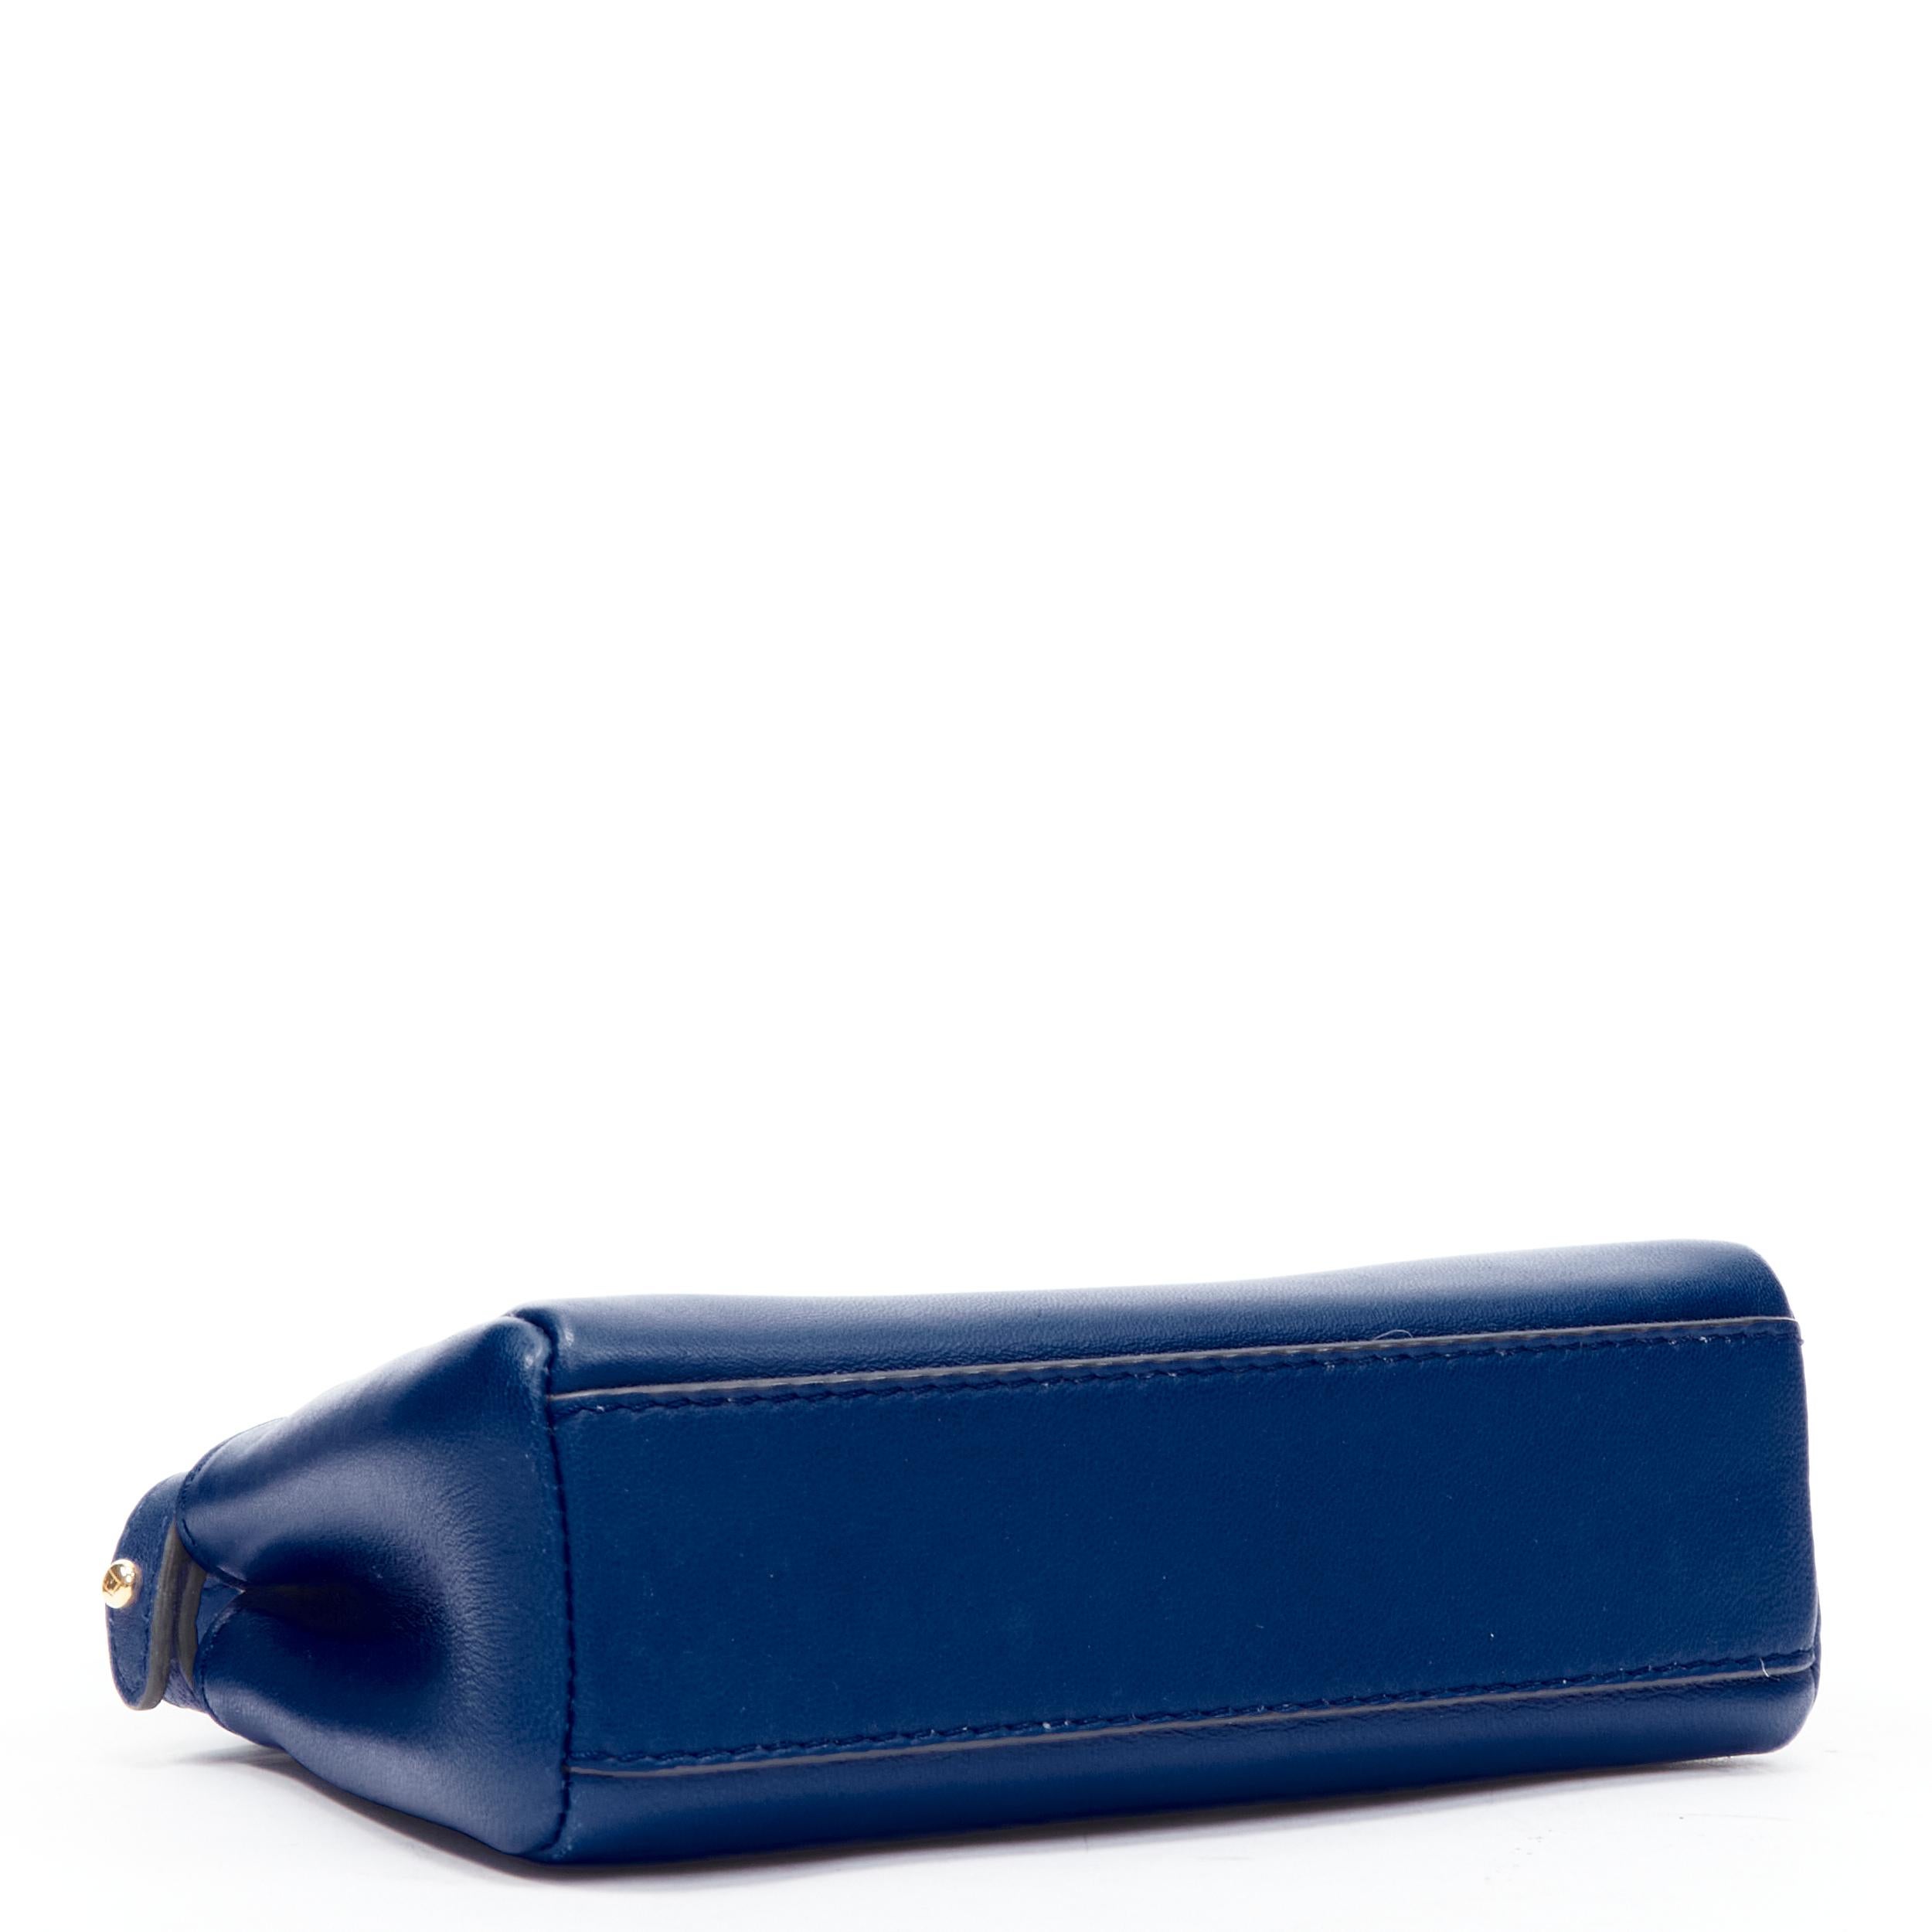 Women's FENDI Micro Peekaboo blue leather gold hardware crossbody bag